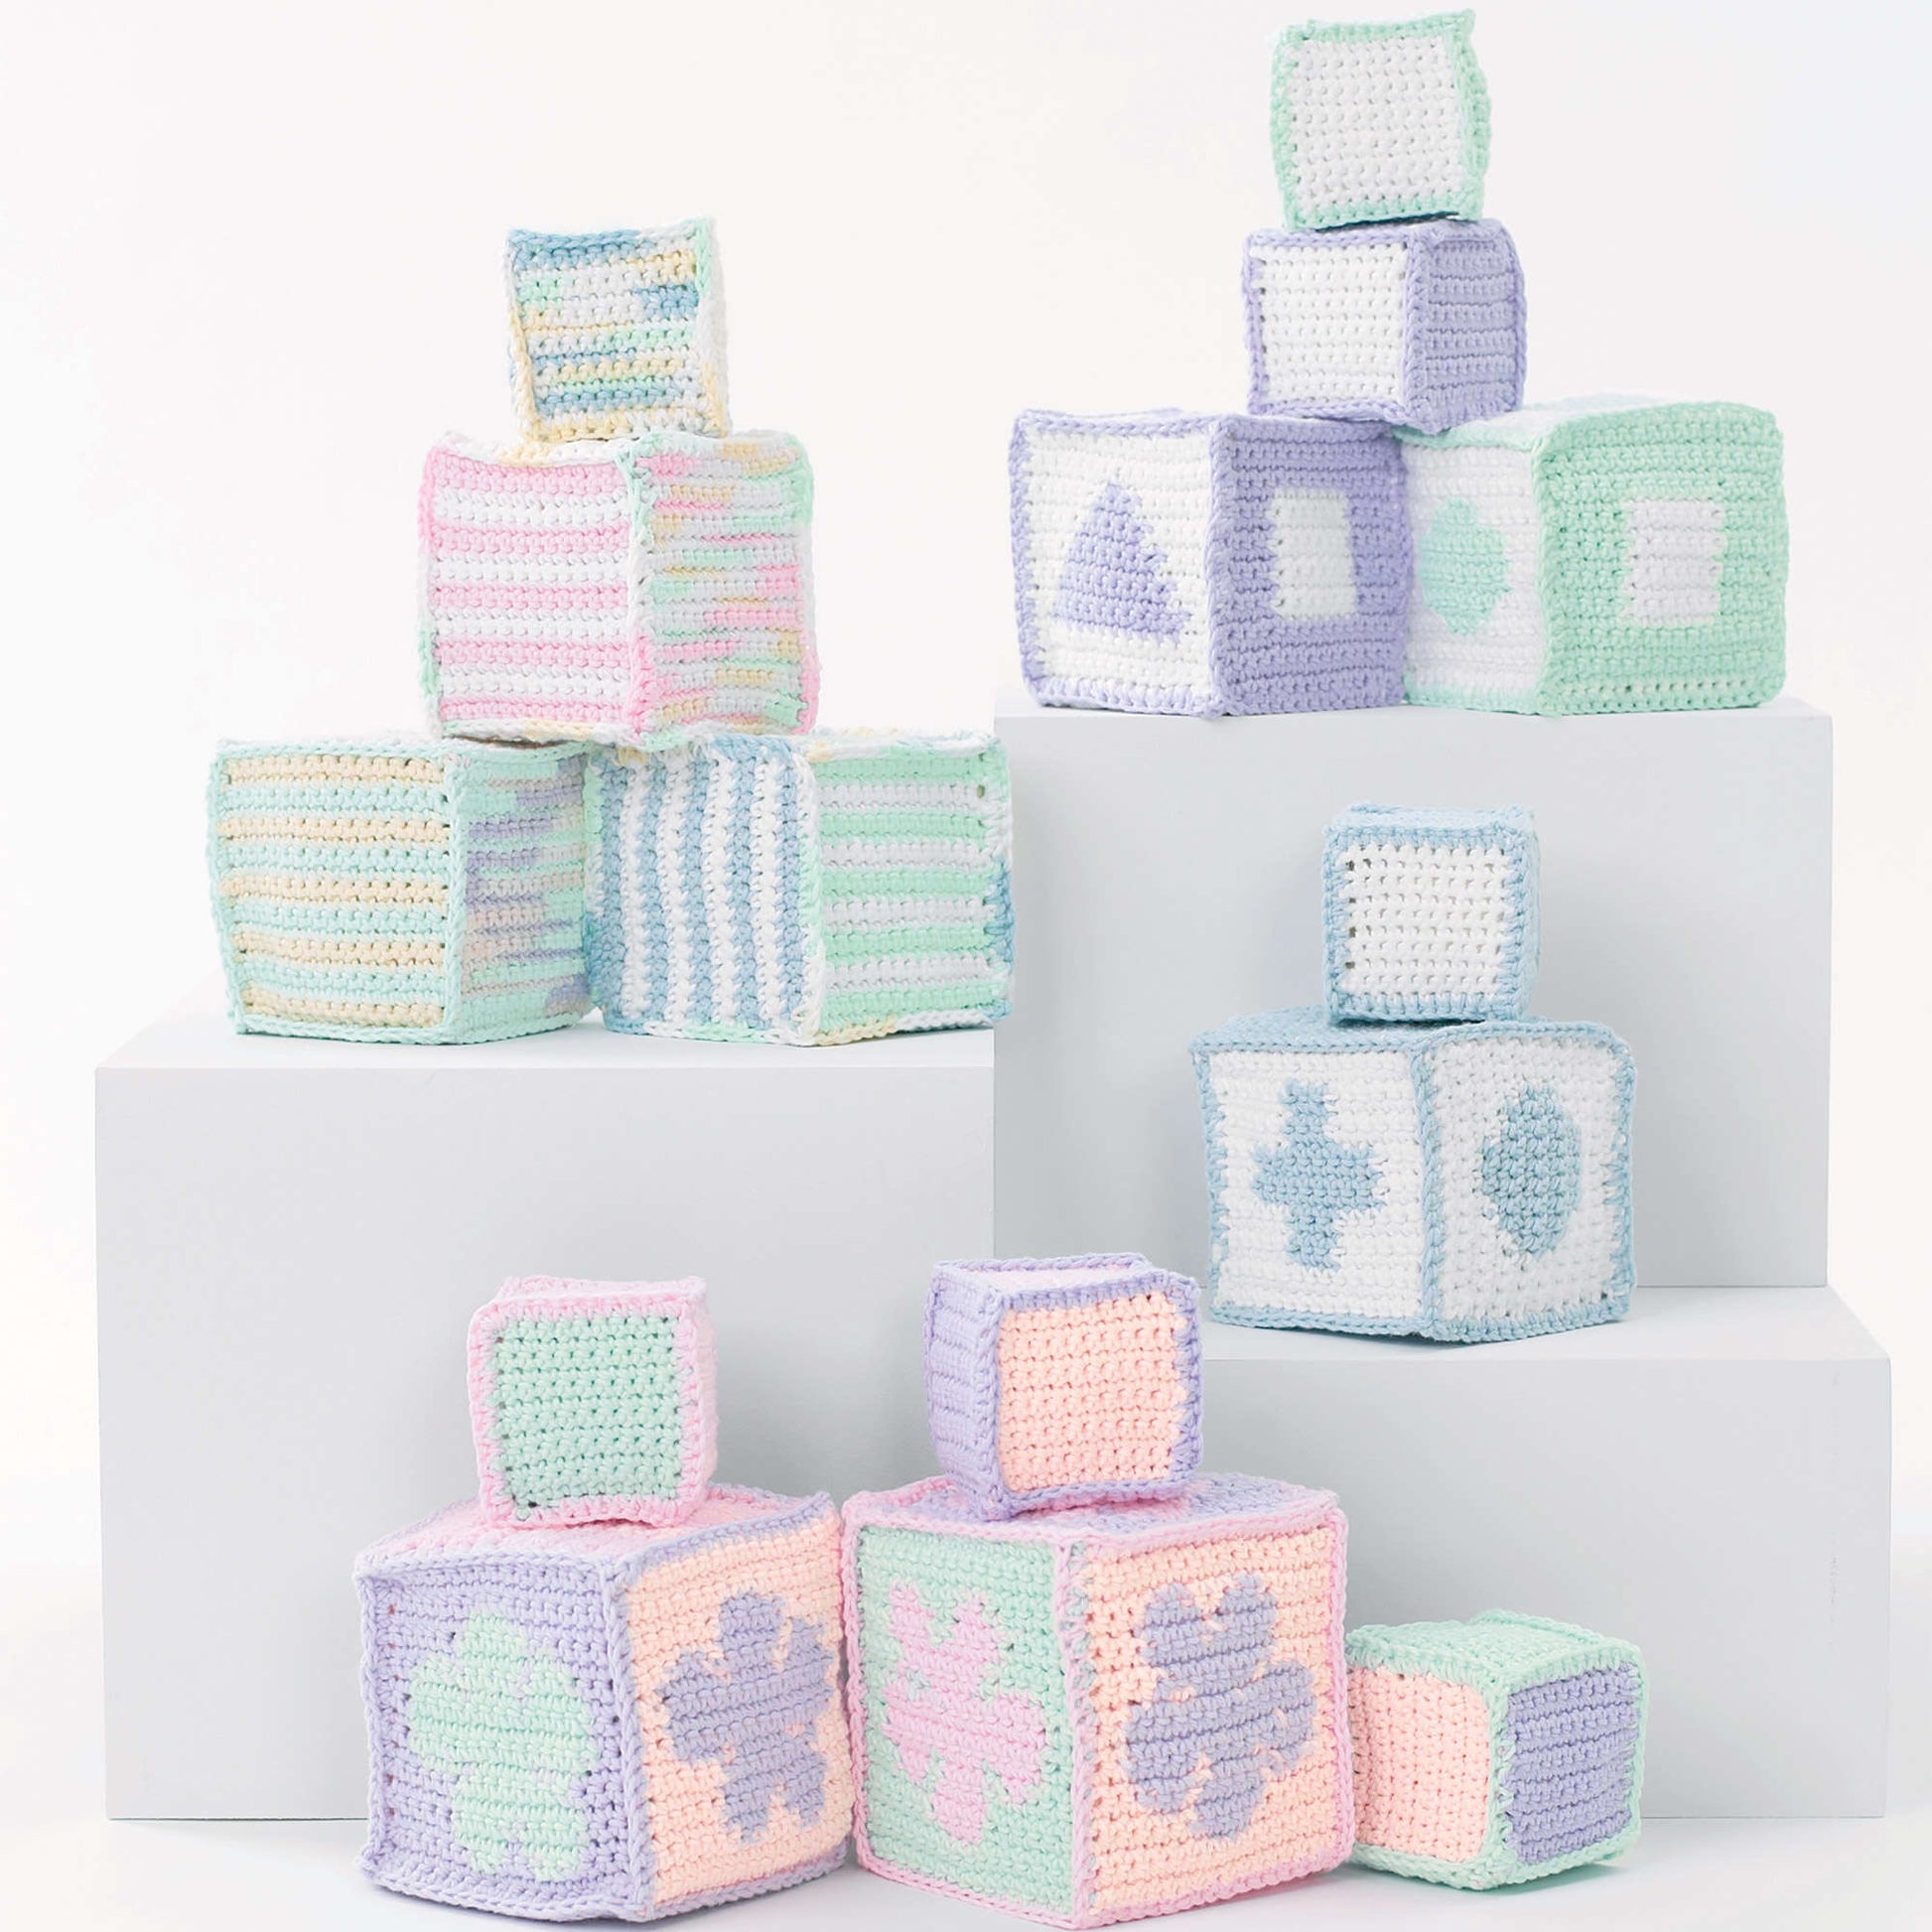 Free Lily Sugar'n Cream Baby's Blocks Crochet Pattern